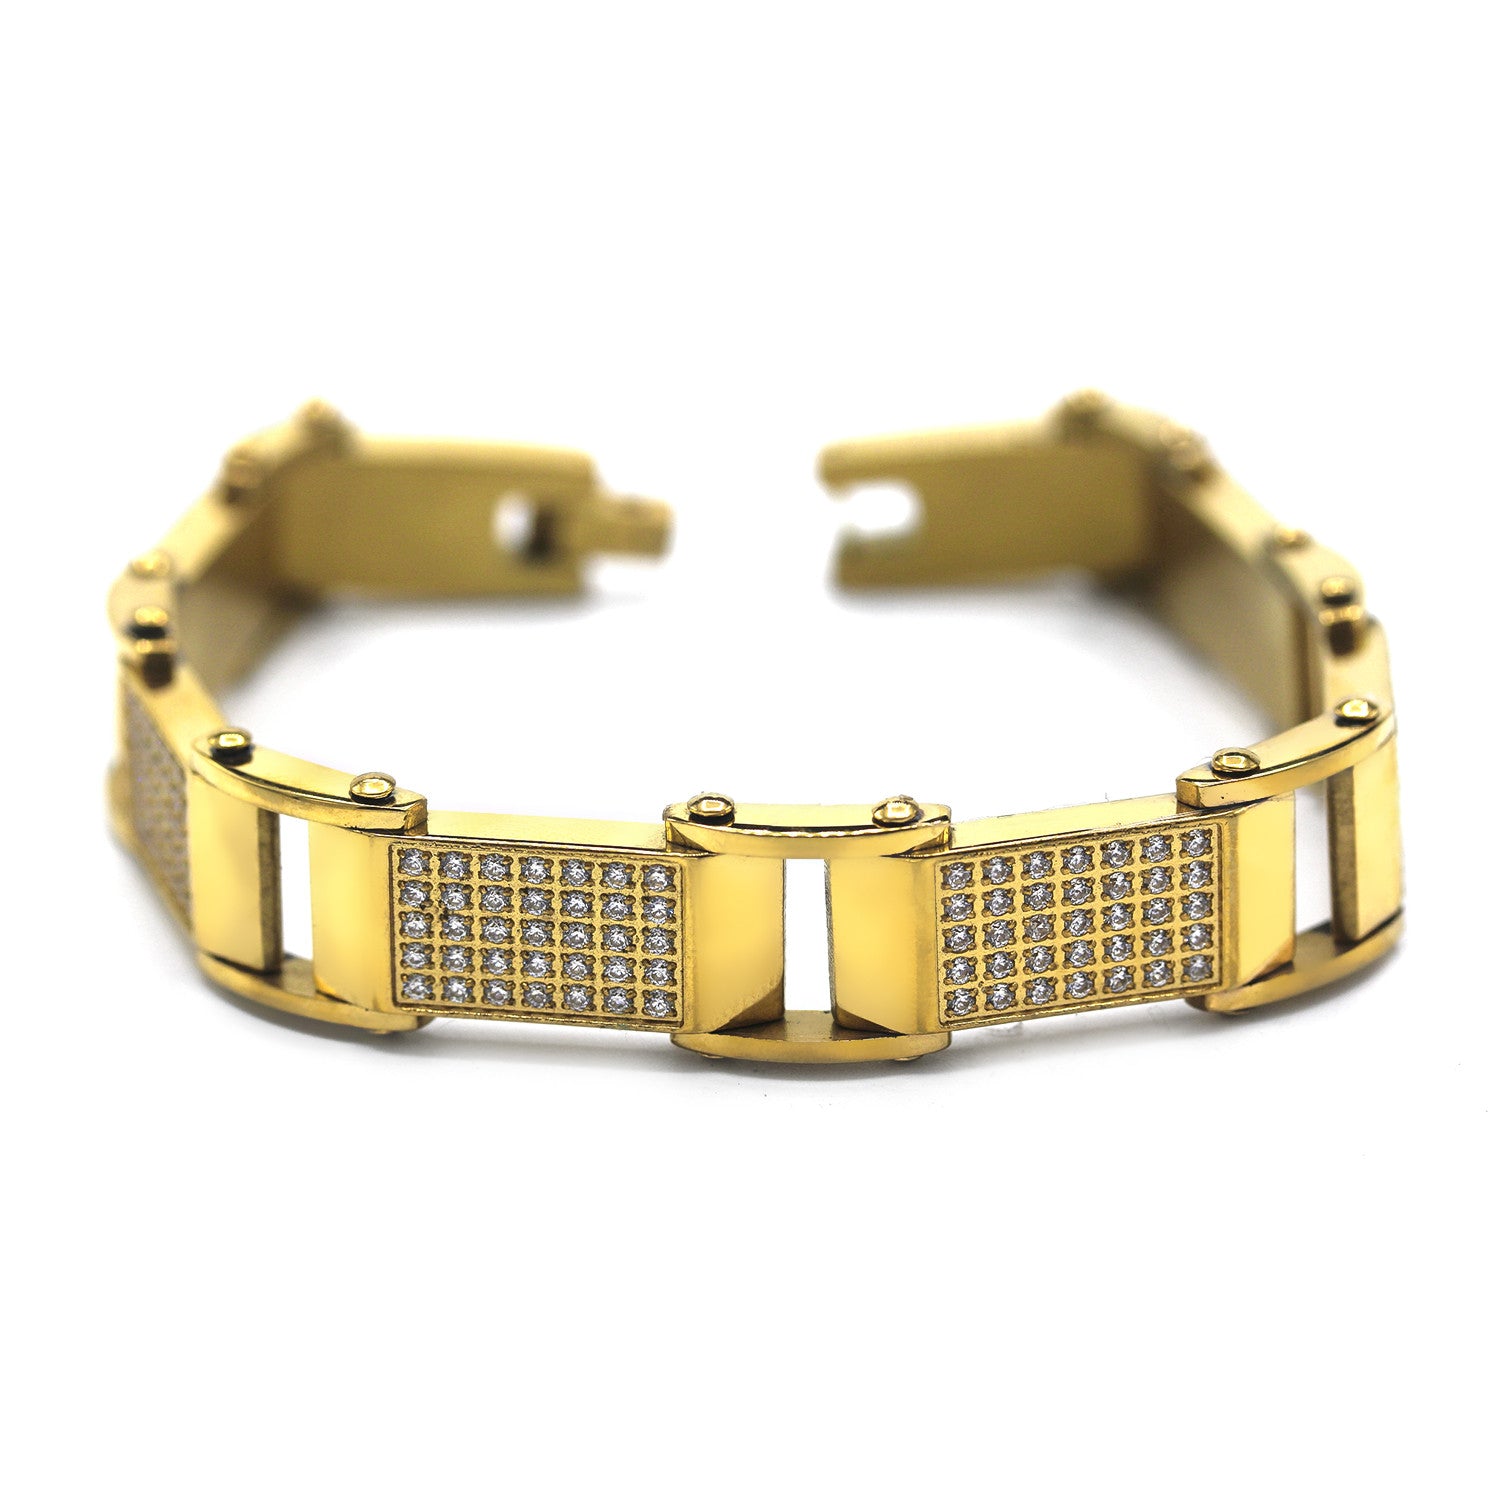 Cubic Zirconia Men's Bracelet 14K Gold Plated Wrist Band Fashion Jewelry 8.5 Bracelet 1